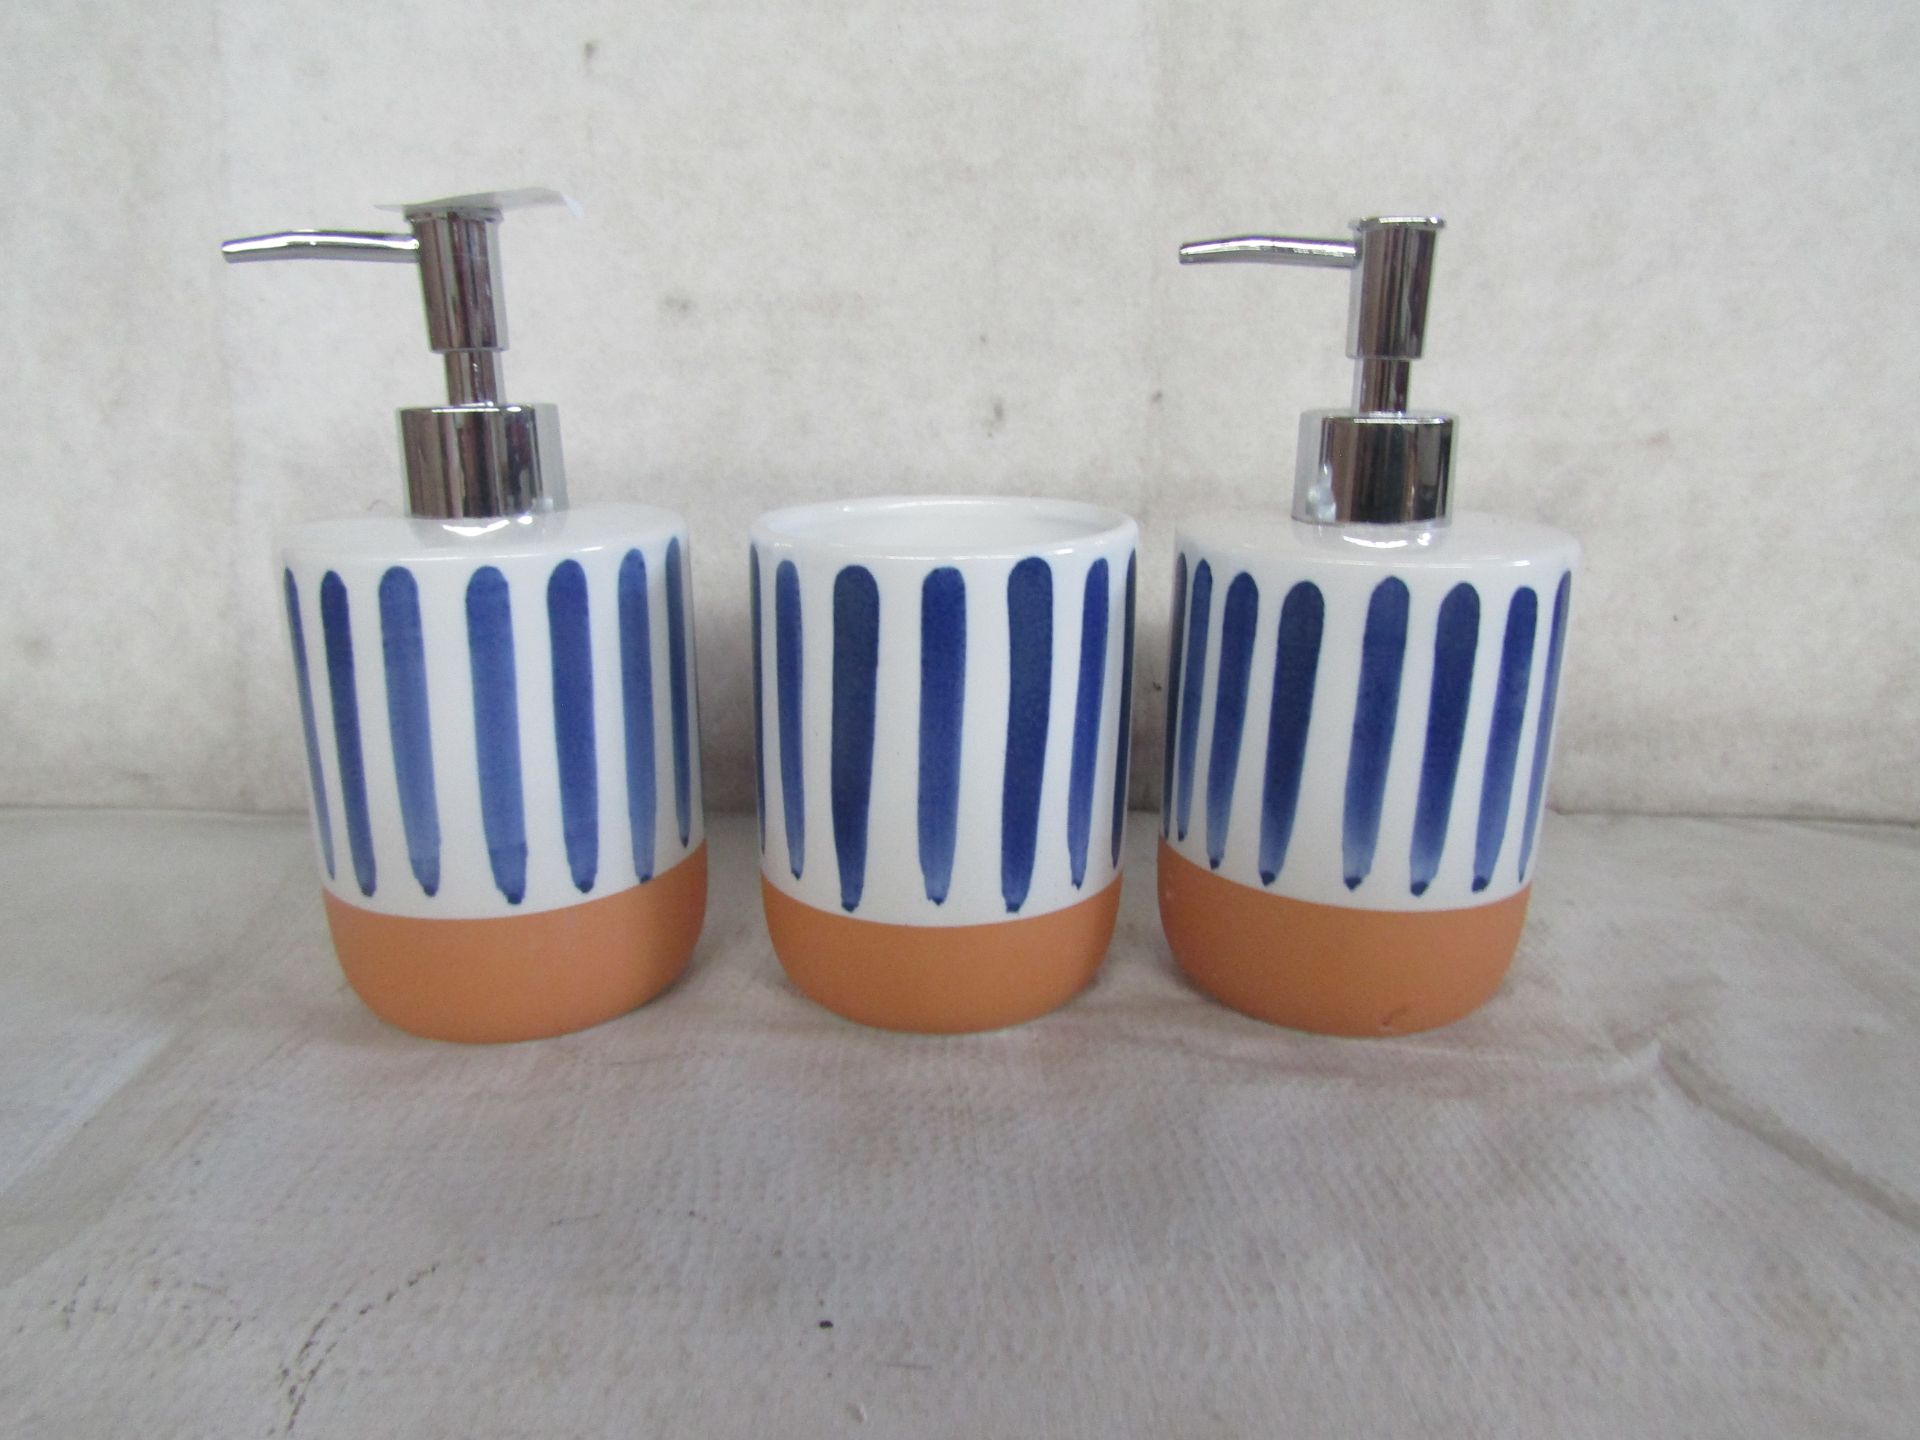 2X Sass & Belle - Paros Blue Stripe Ceramic Soap Dispensers - Good Condition. 1X Sass & Belle -